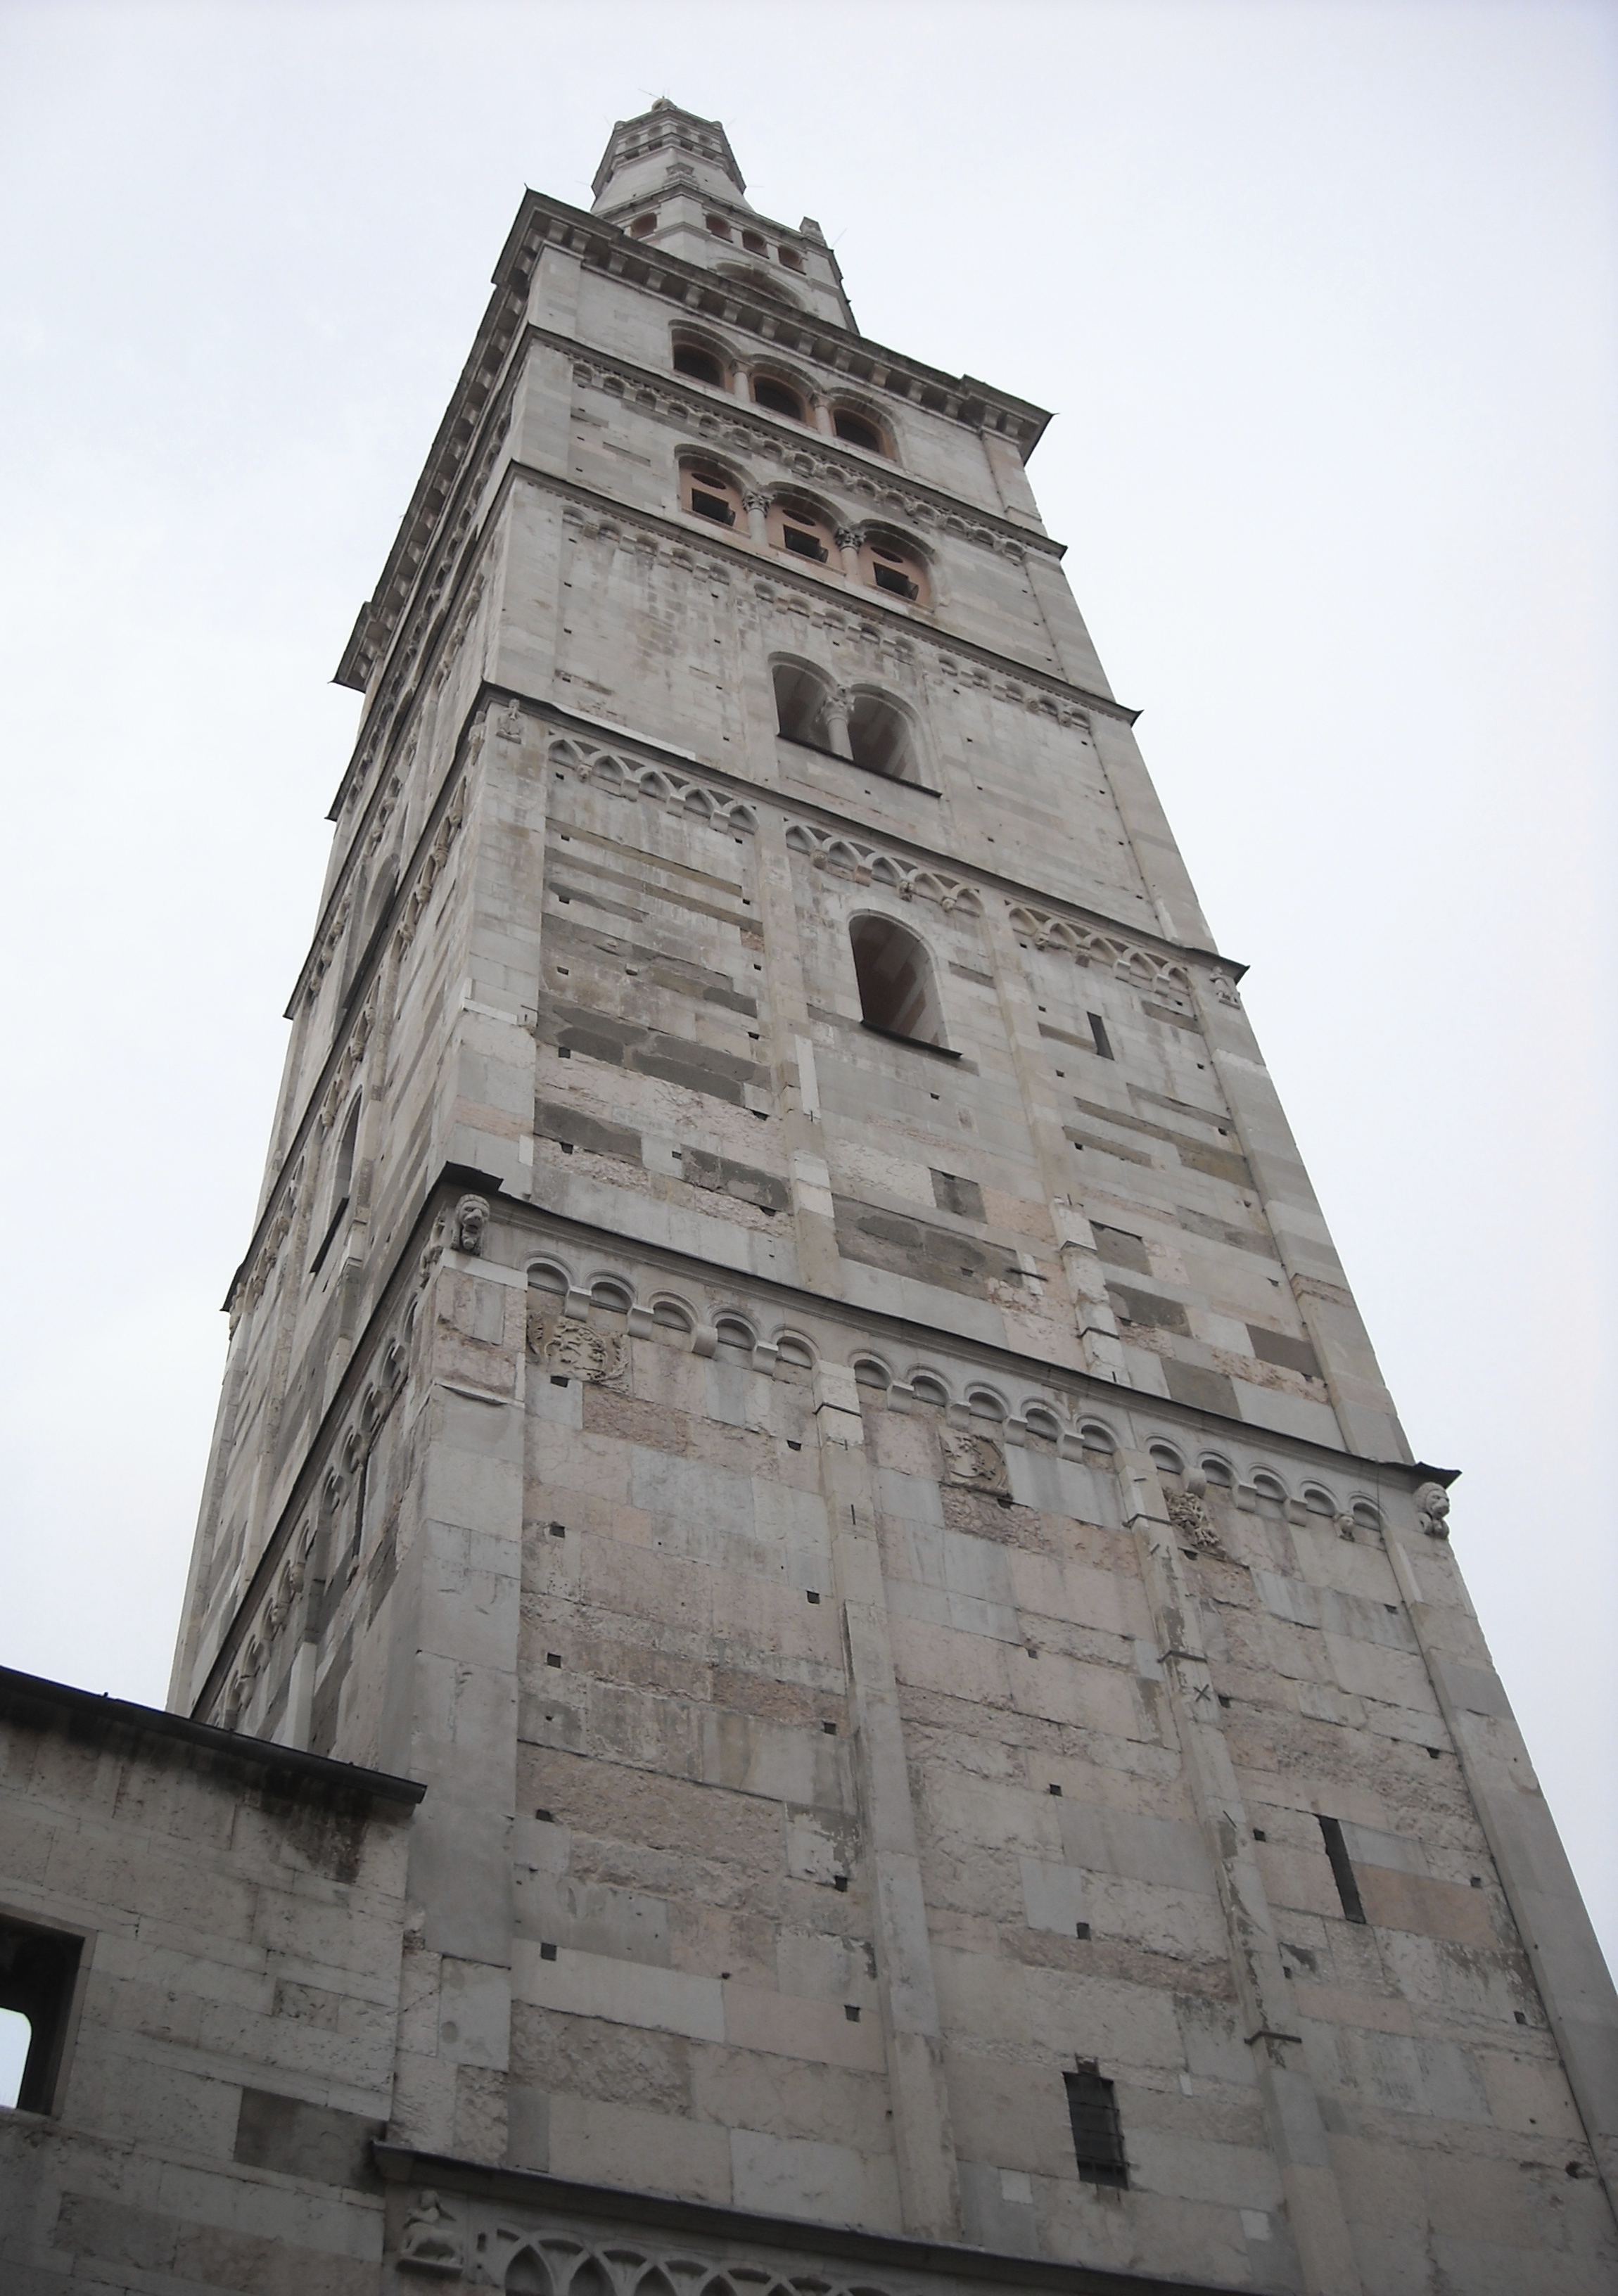 foto: https://upload.wikimedia.org/wikipedia/commons/b/b2/Duomo_di_Modena%2C_torre_campanaria.jpg